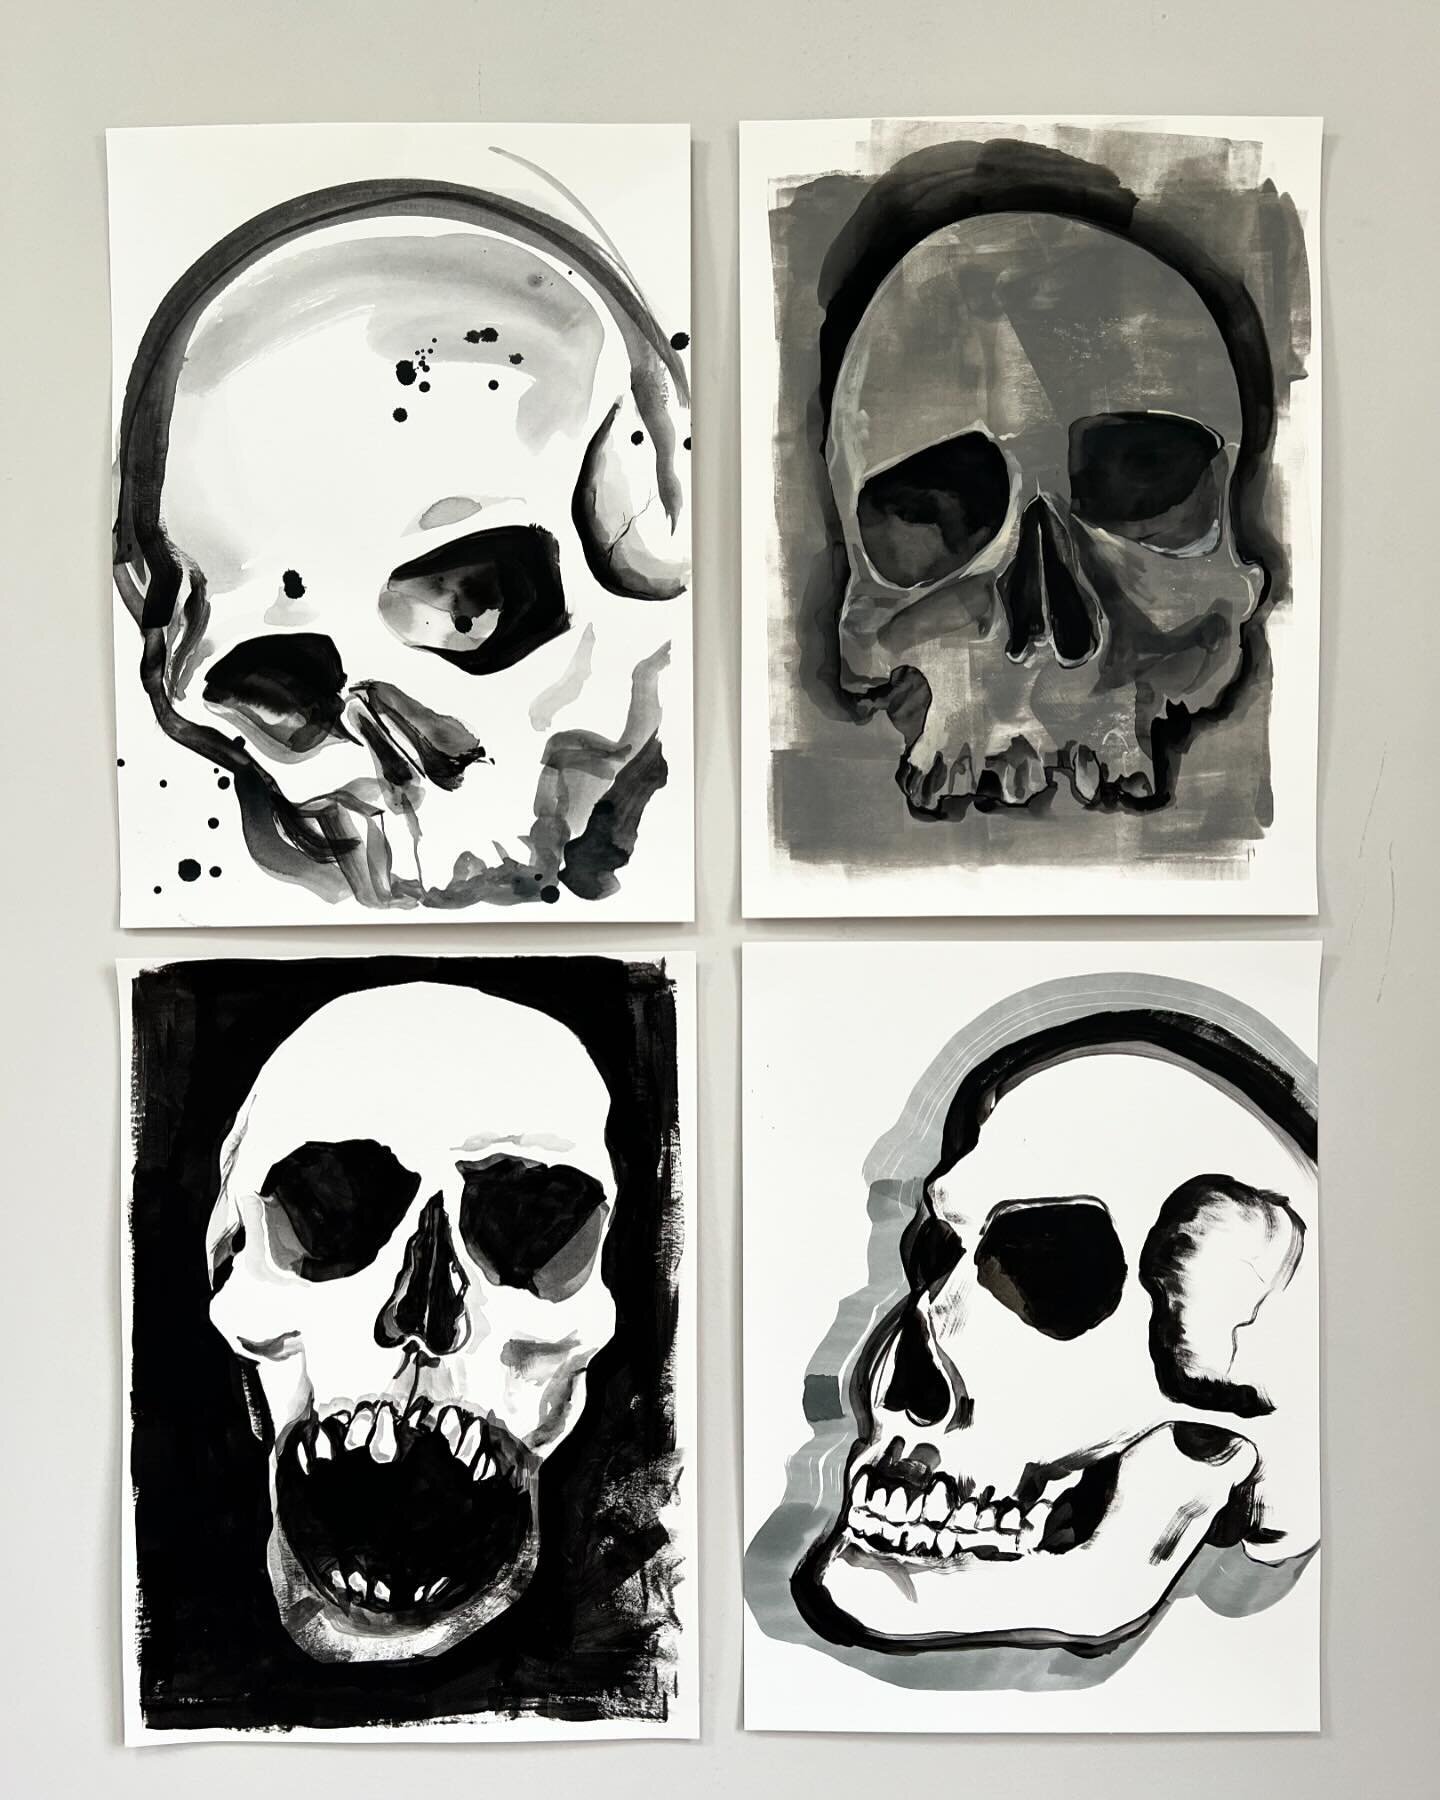 Skull 💀 Day

In the studio. 
Working. Playing. Exploring. 

#saatchiart#igart#womeninart#contemporaryart#colleenayson#artgallery #nyartist #showusyourart #studioviews_daily #buffalove #artcurators #artprocess #igart #insidethestudio #drawing #abstra